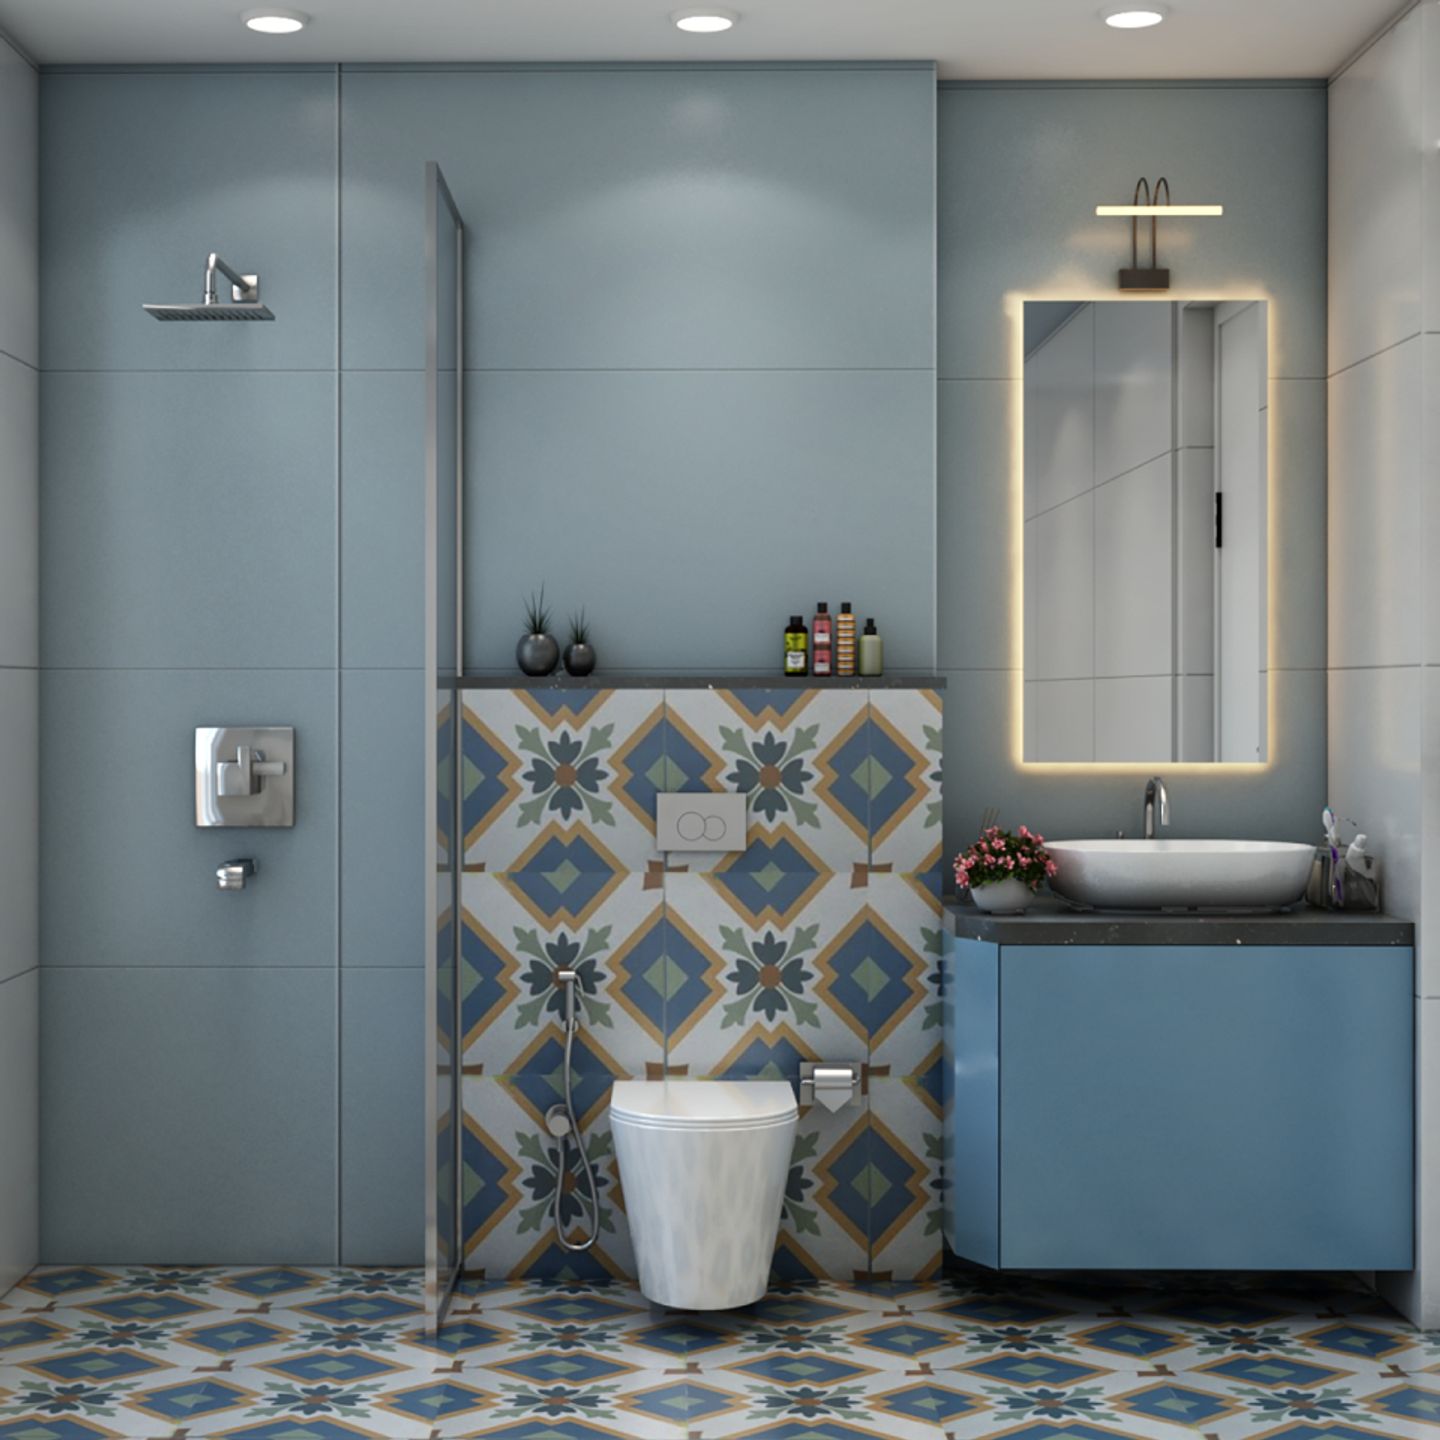 Moroccan Bathroom Wall Tiles - Livspace